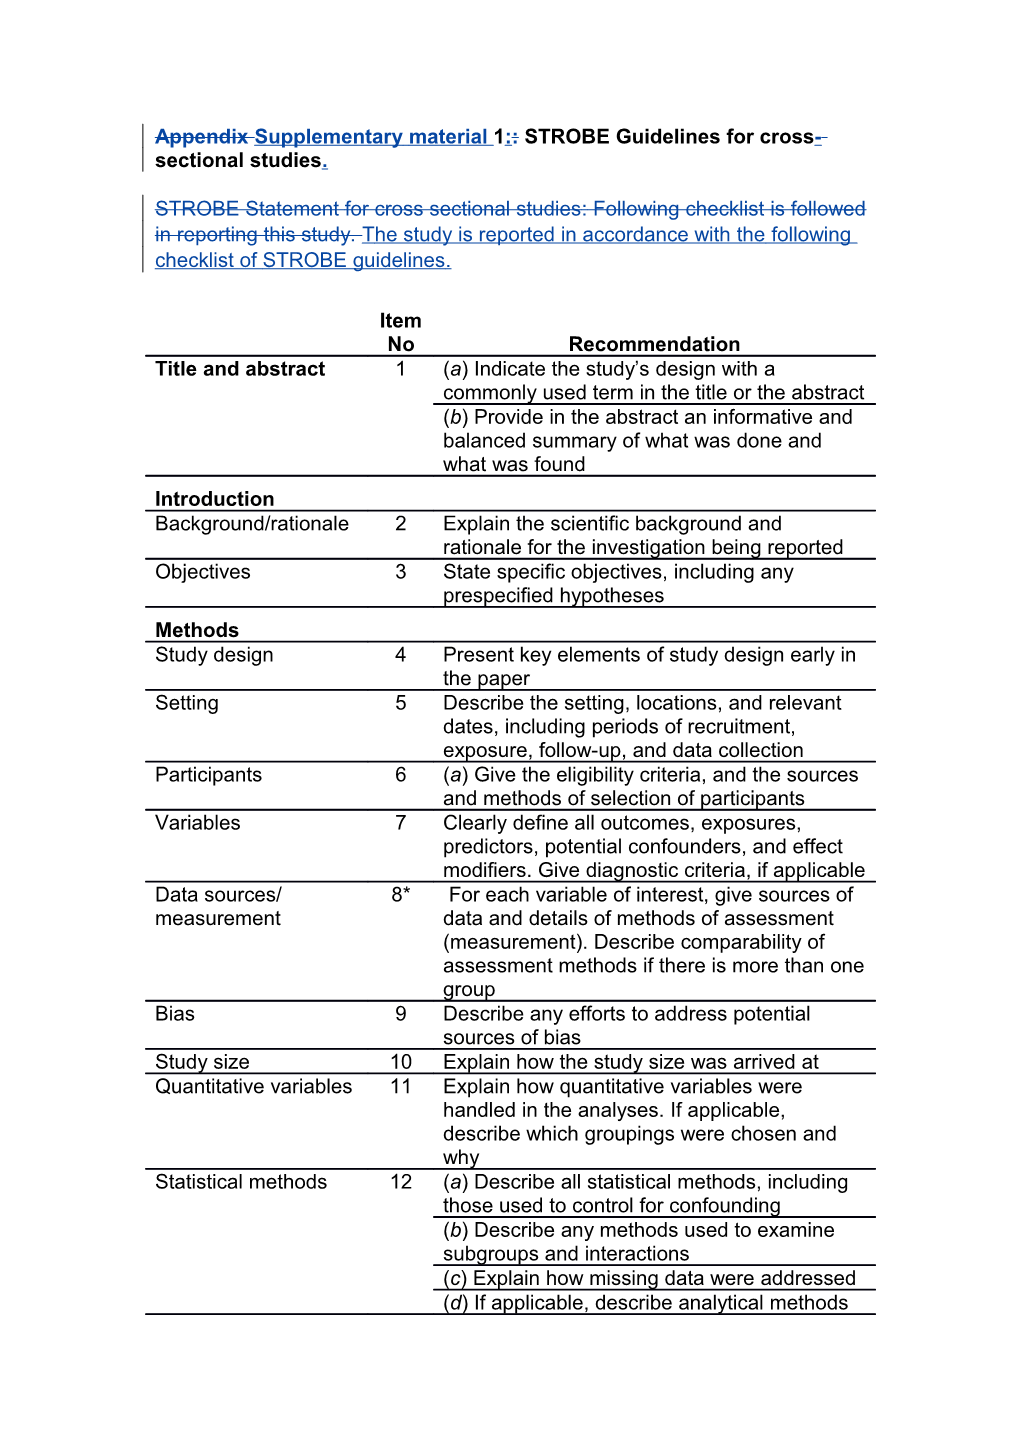 Appendix Supplementary Material 1 STROBE Guidelines for Cross - Sectional Studies